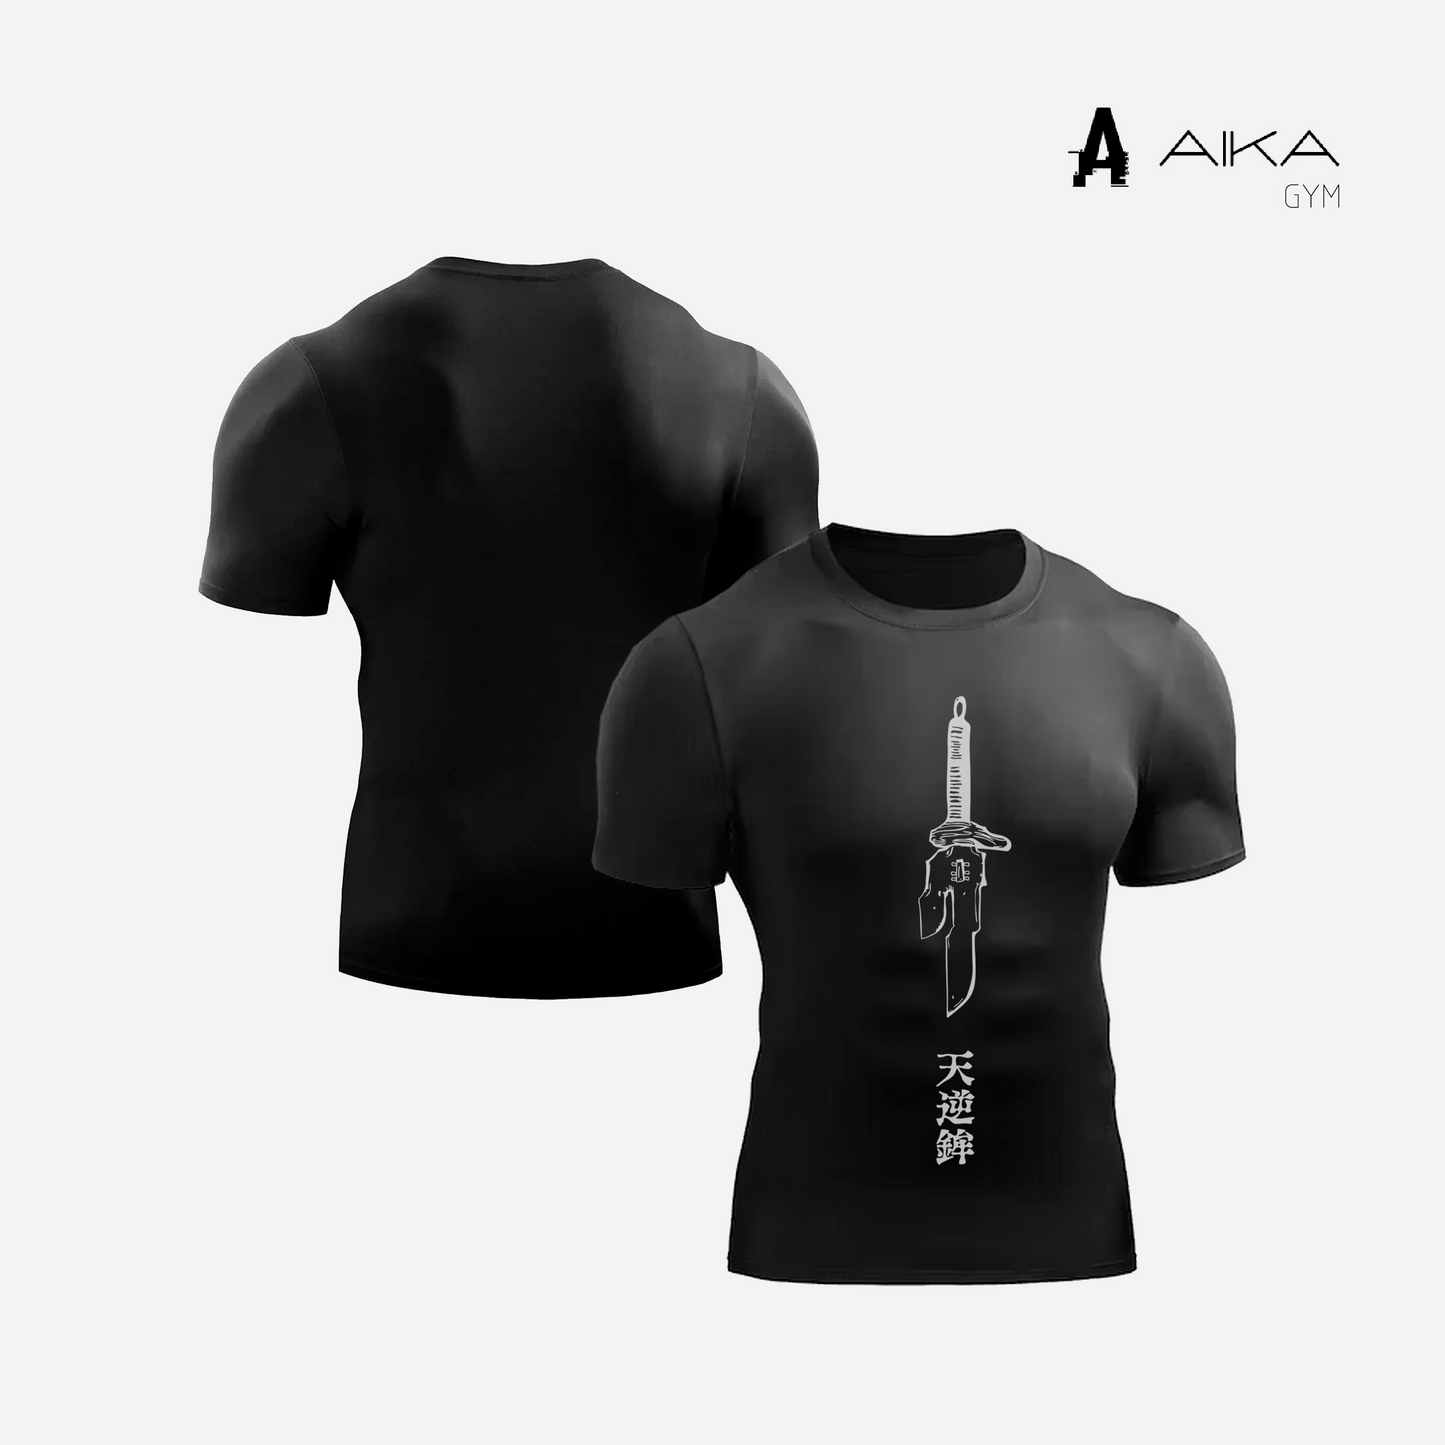  ARTSIM Camiseta de compresión para hombre, camiseta